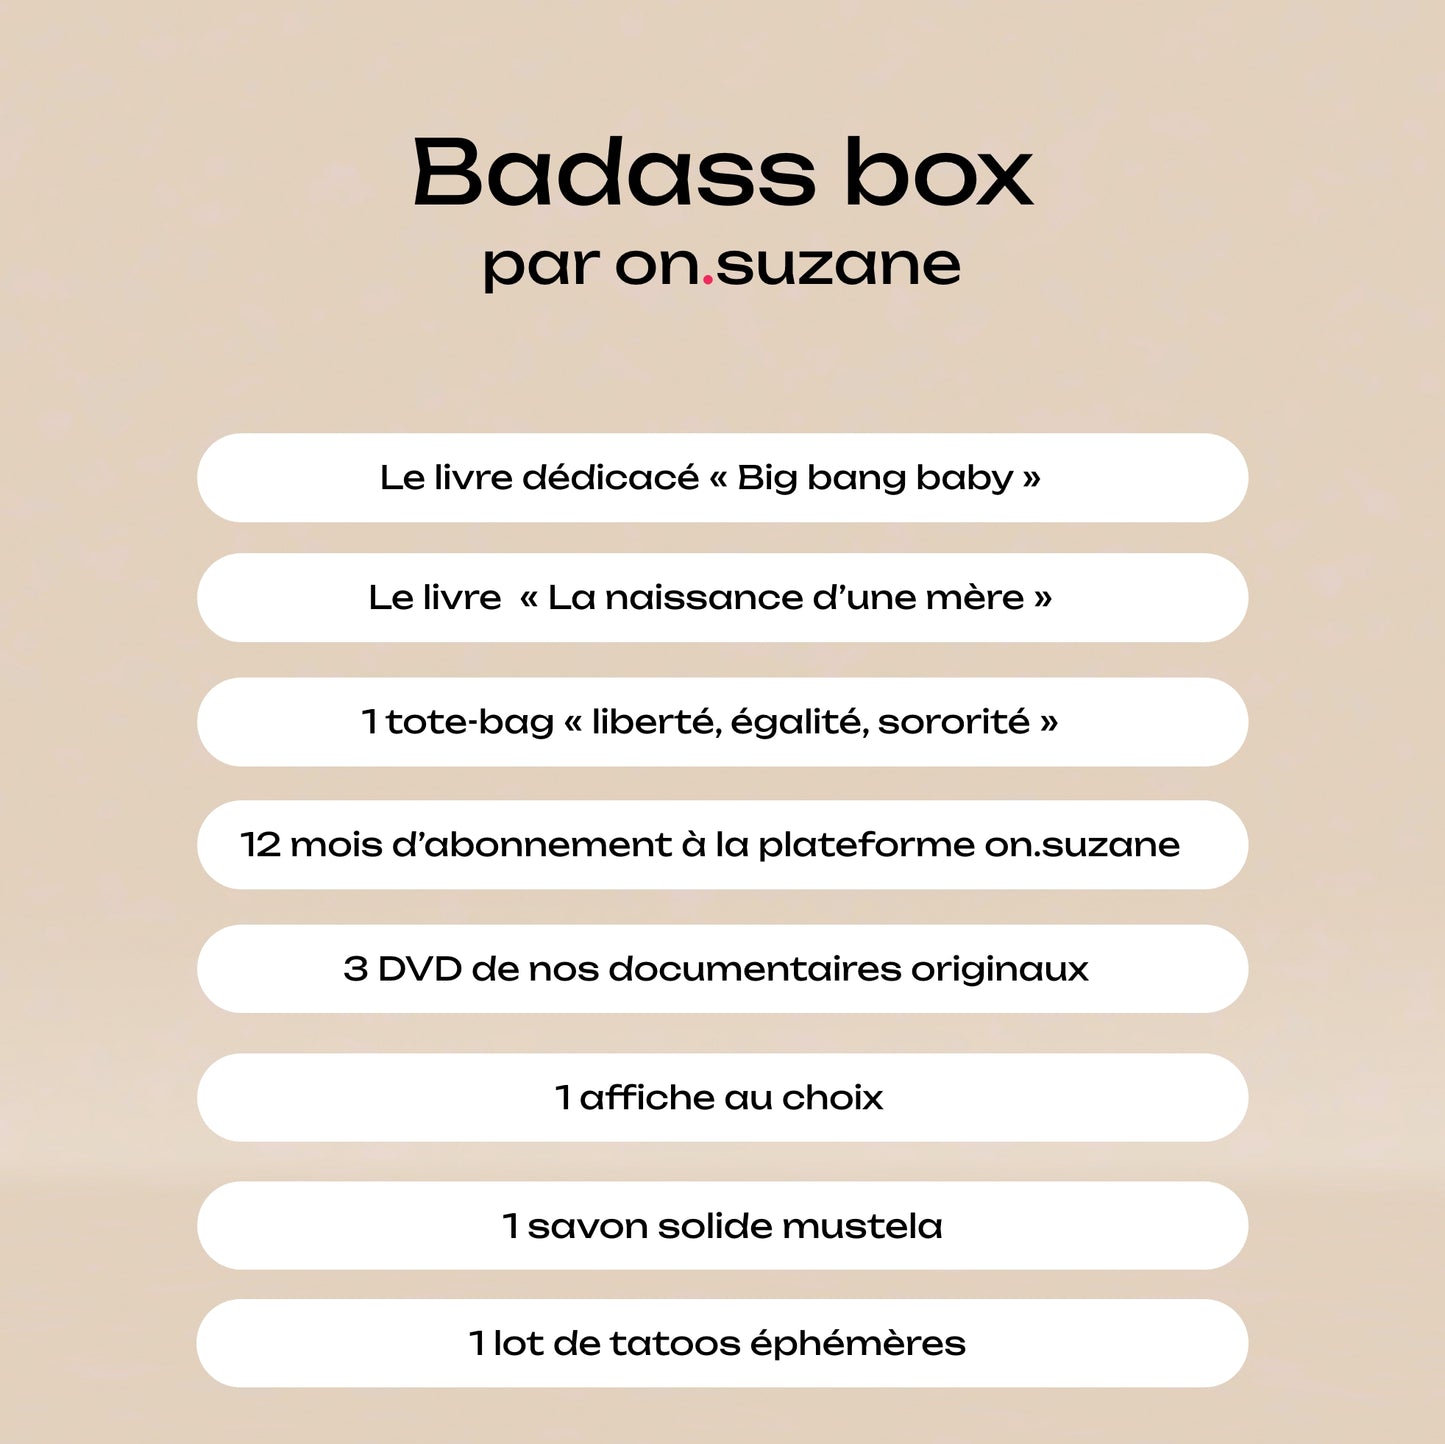 Badass box - Alice